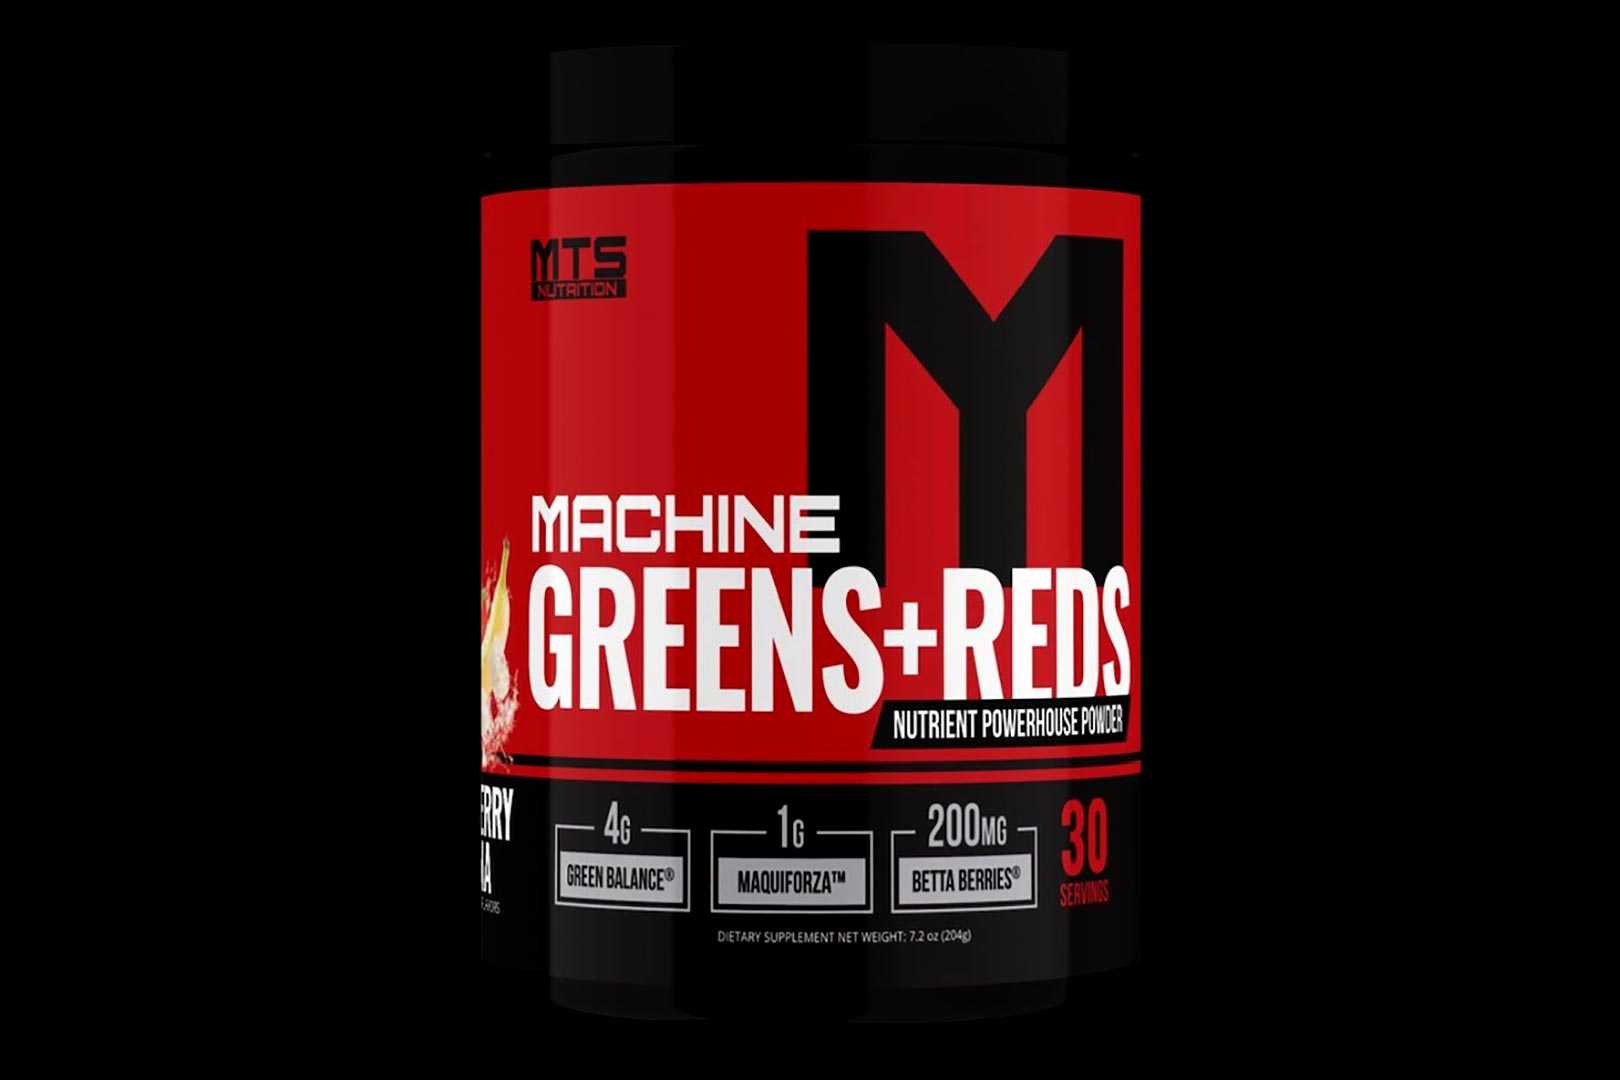 Mts Nutrition Machine Greens Reds